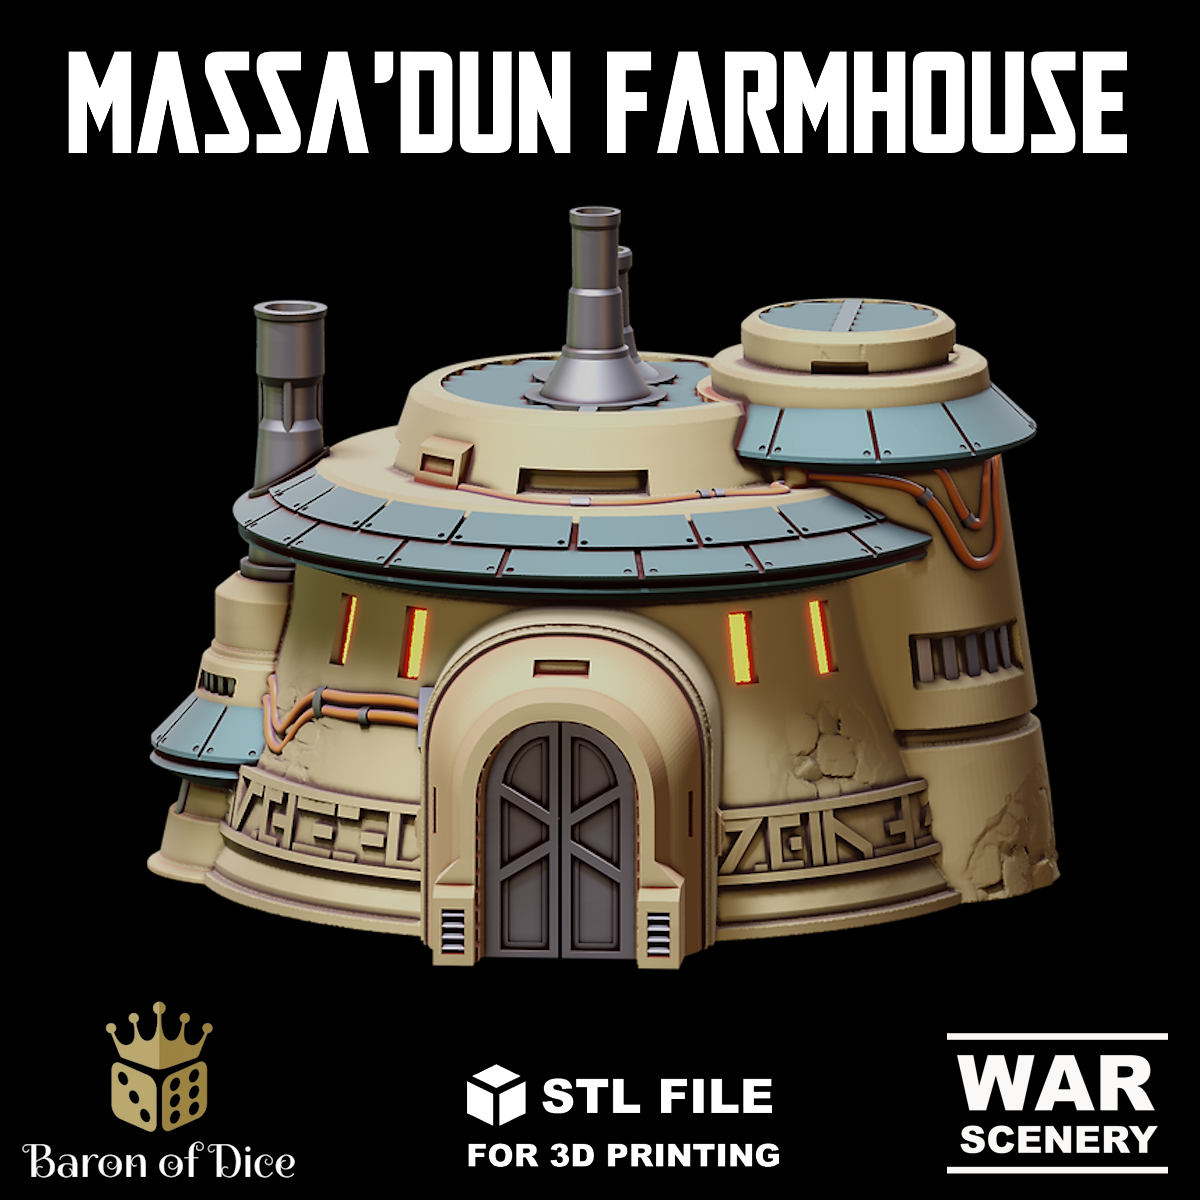 Massadun Farmhouse, STL File